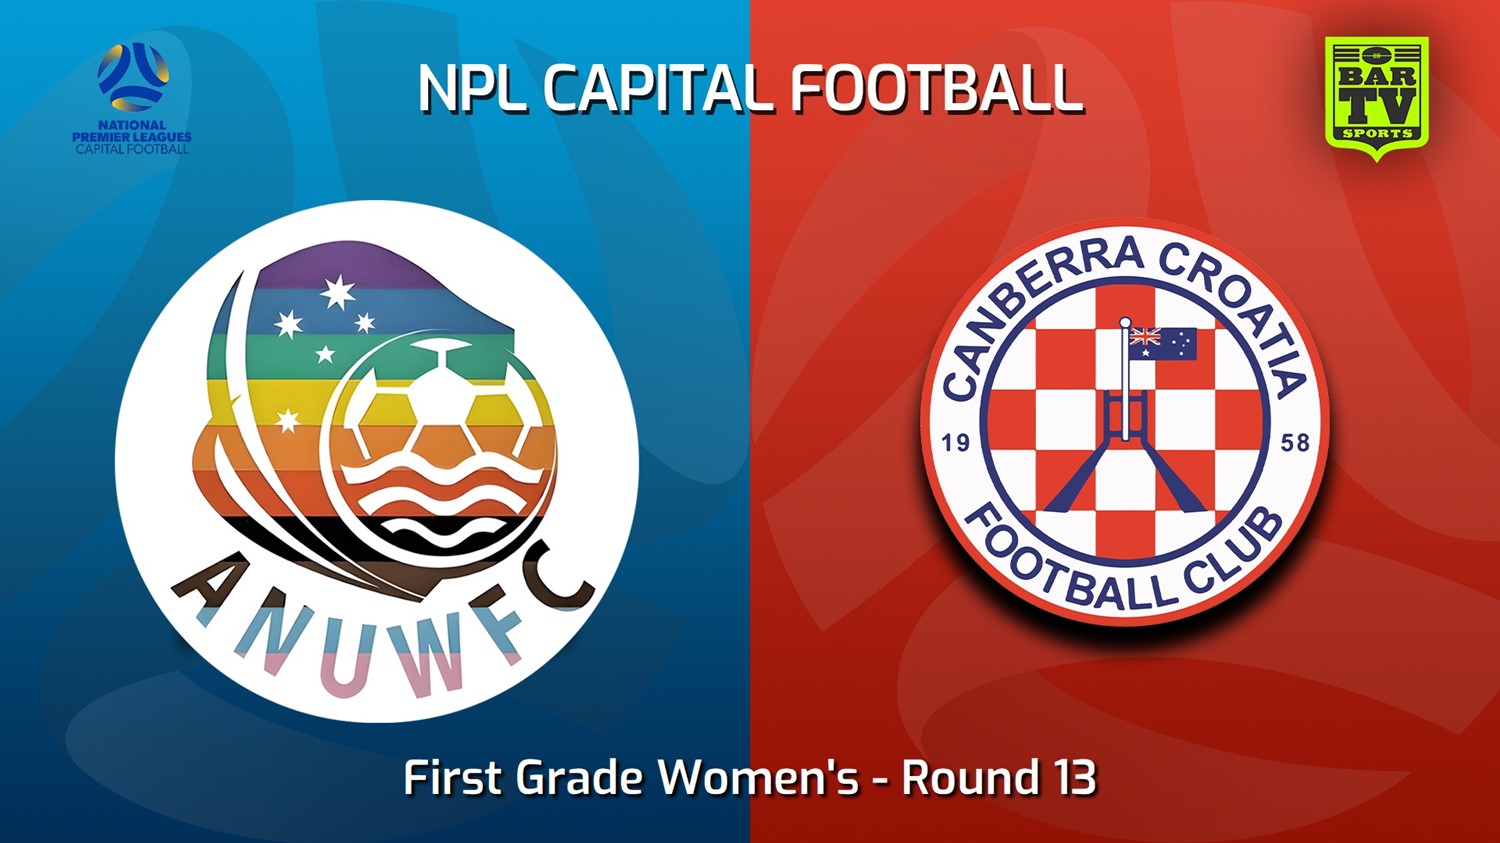 230702-Capital Womens Round 13 - ANU WFC (women) v Canberra Croatia FC (women) Minigame Slate Image